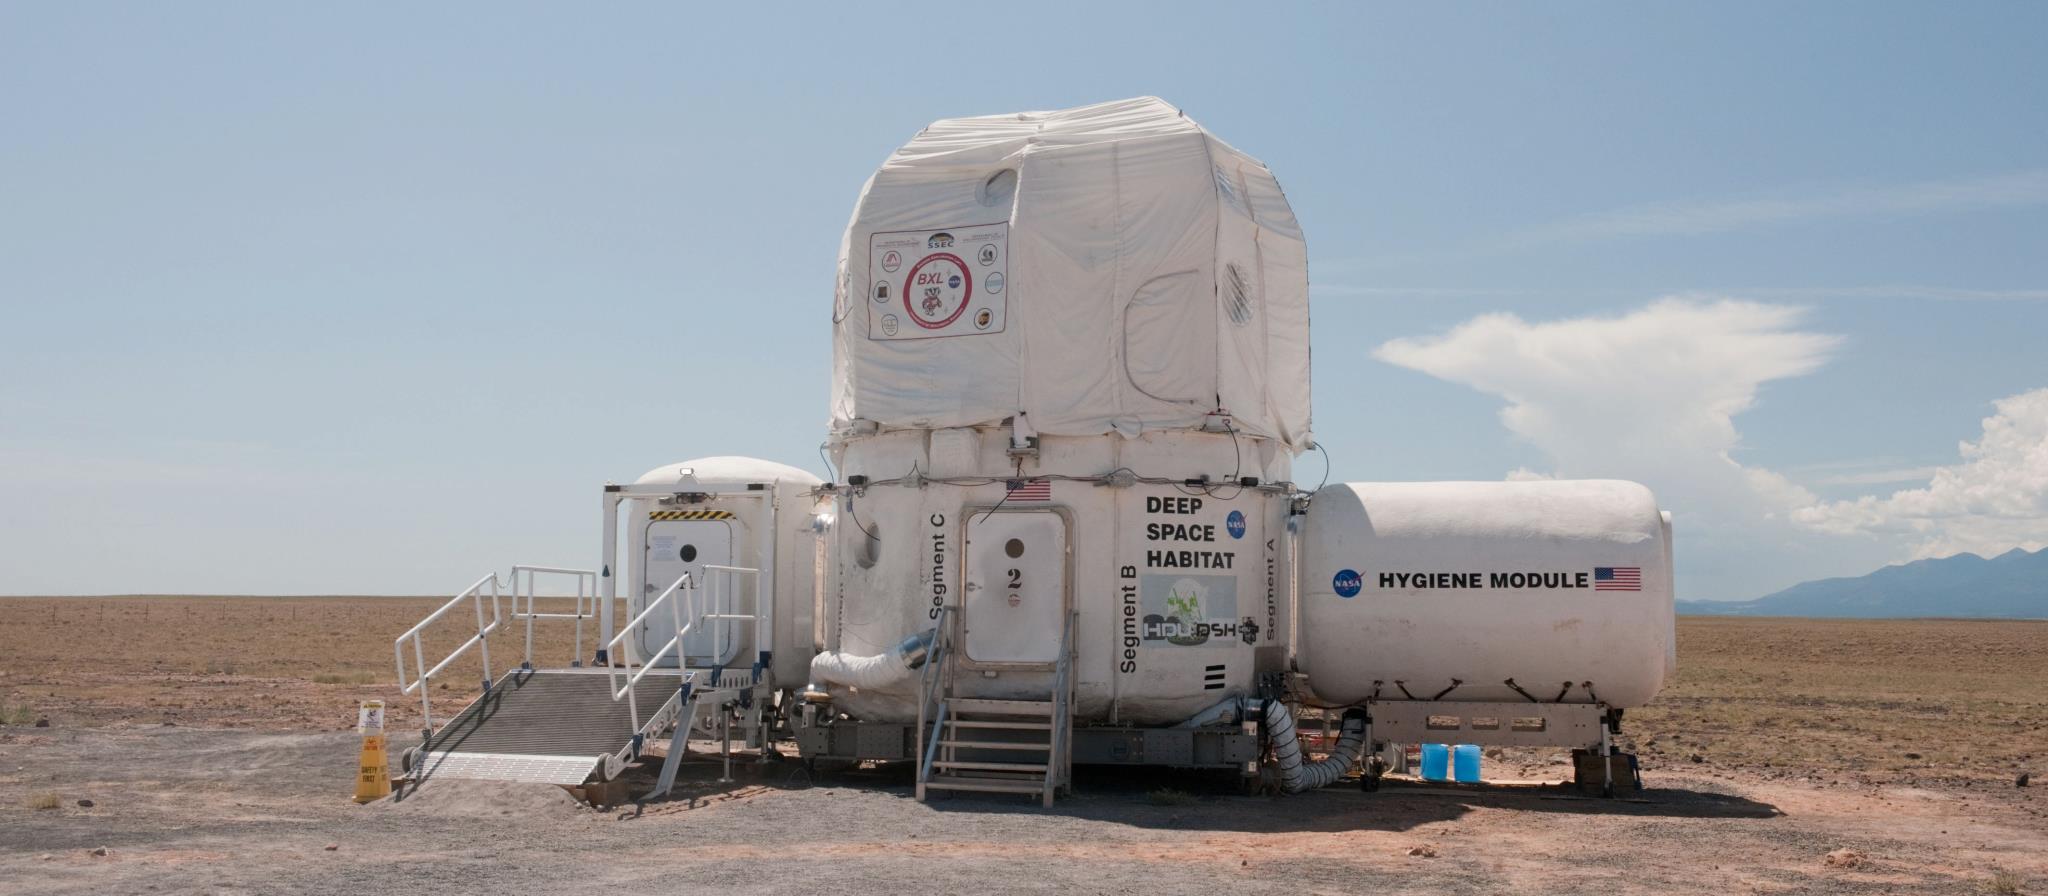 NASA Exploration Habitat